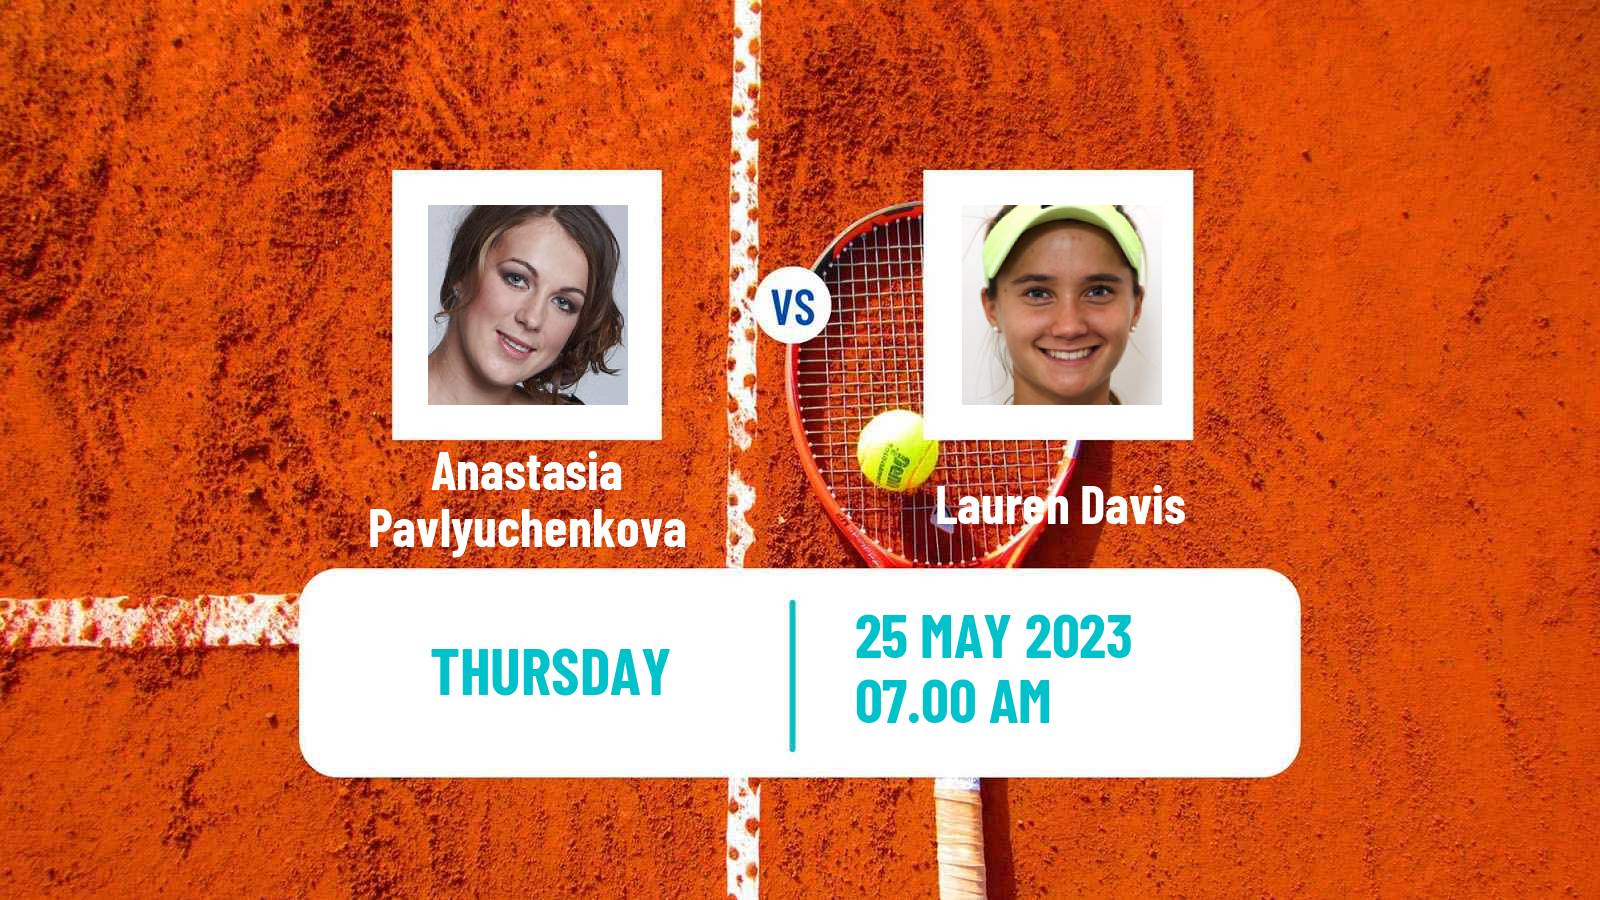 Tennis WTA Strasbourg Anastasia Pavlyuchenkova - Lauren Davis